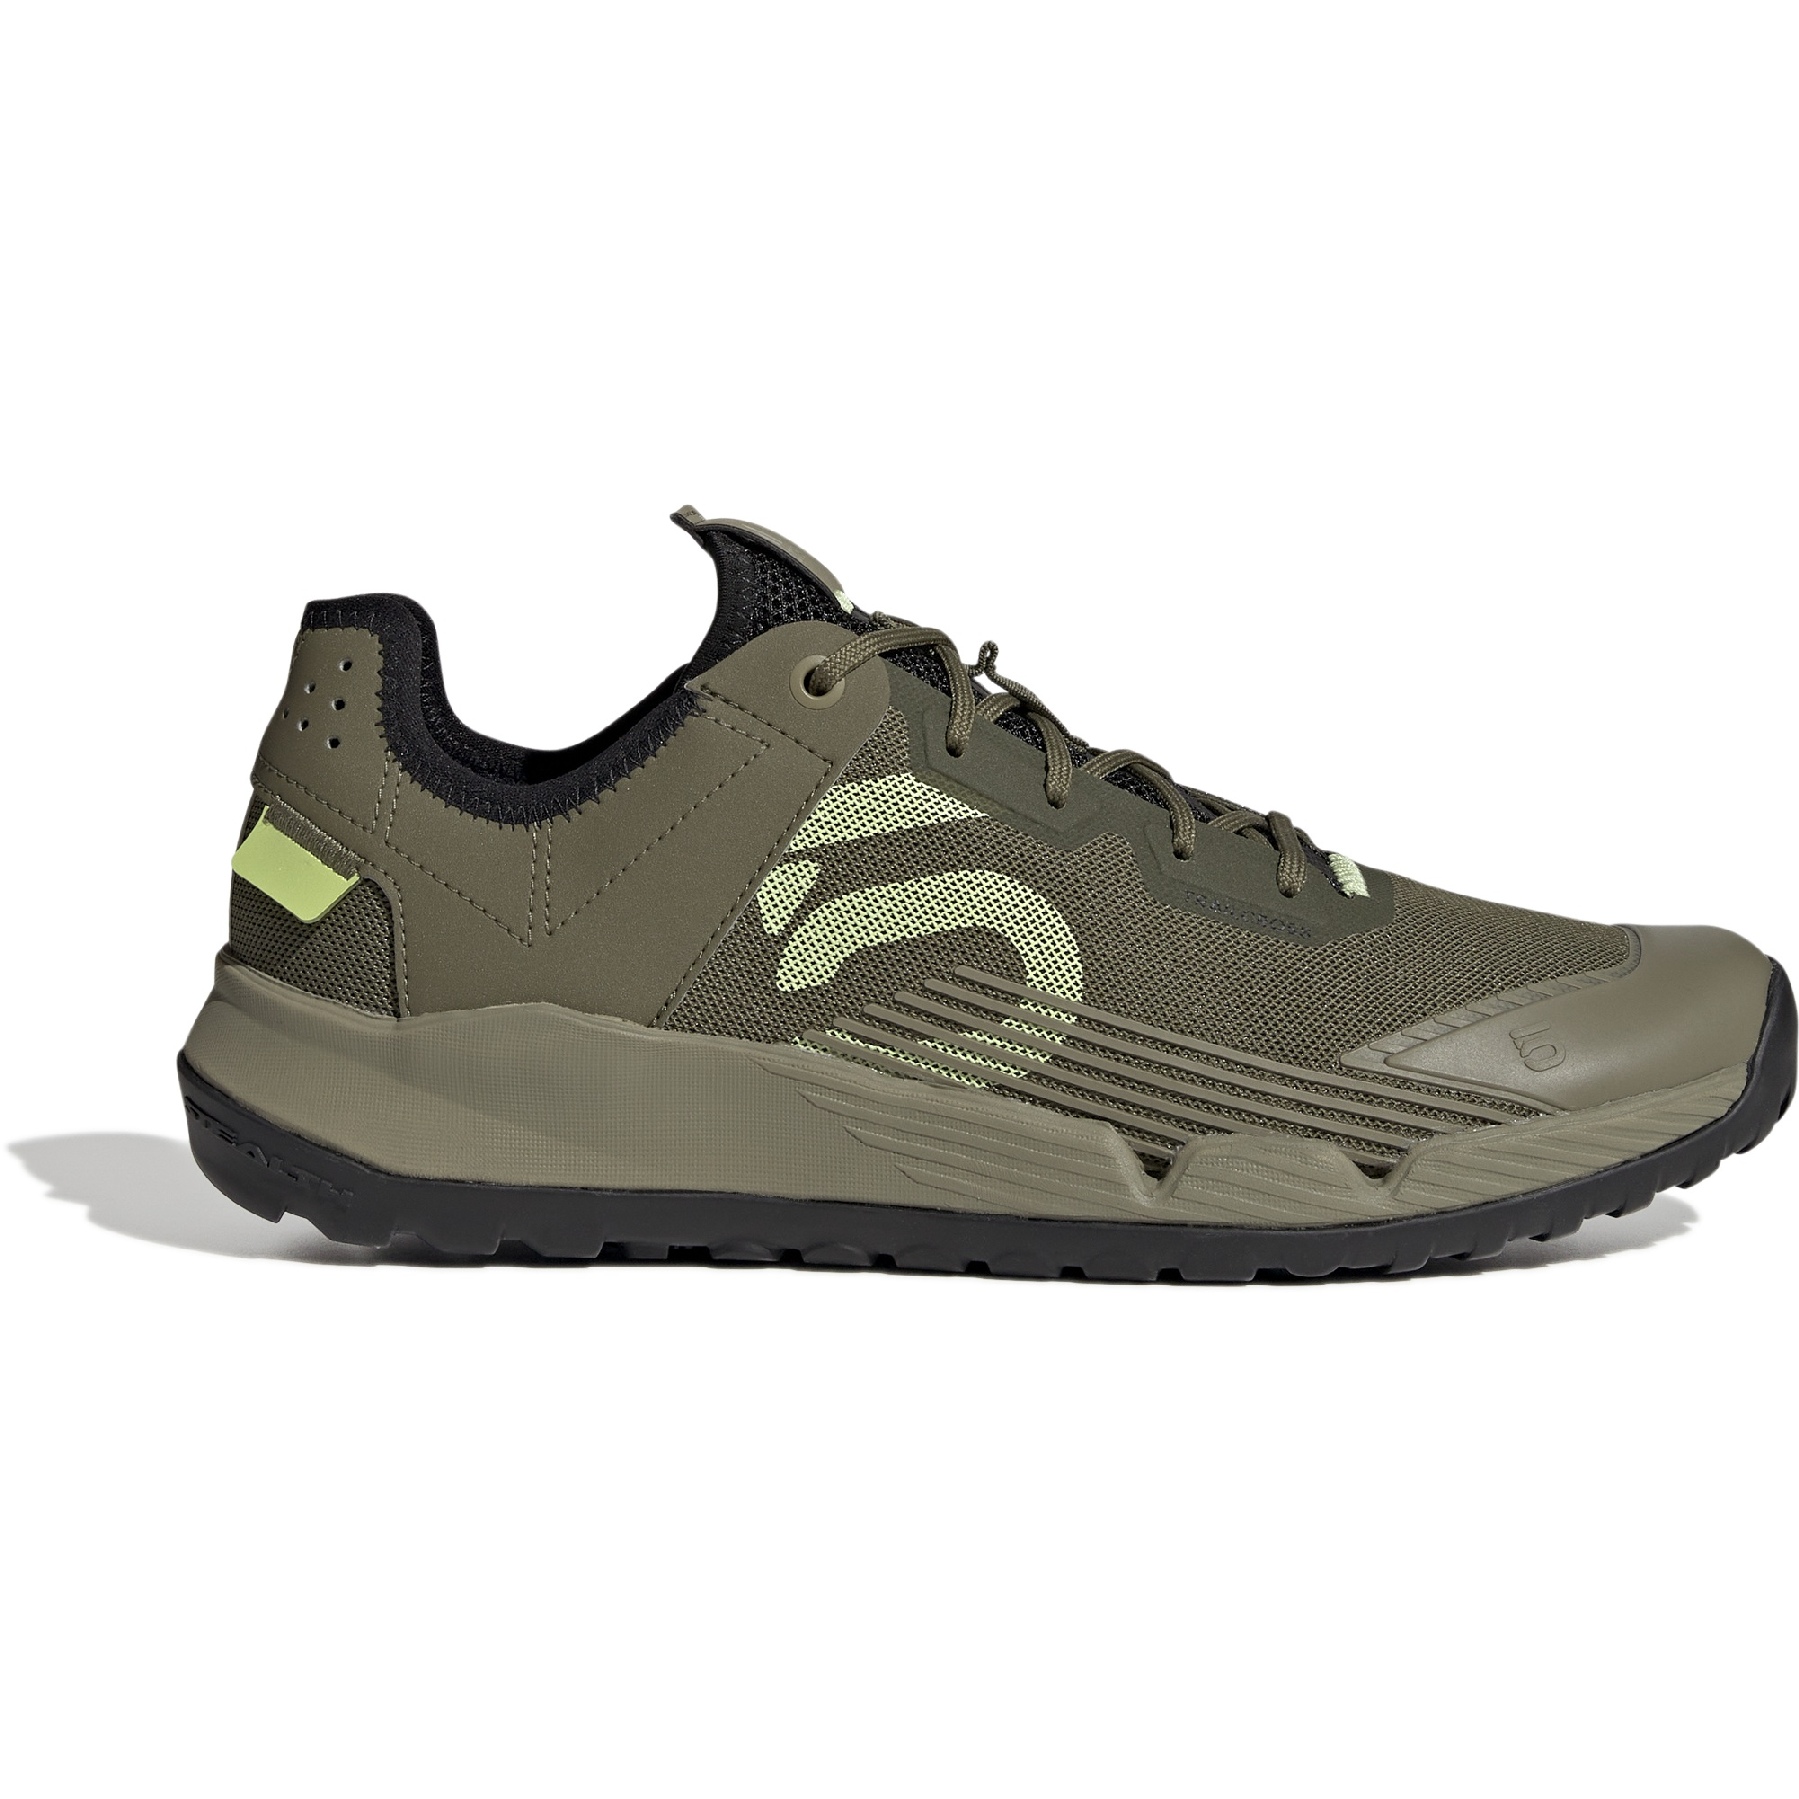 Productfoto van Five Ten Trail Cross LT MTB Shoes - Focus Olive / Pulse Lime / Orbit Green